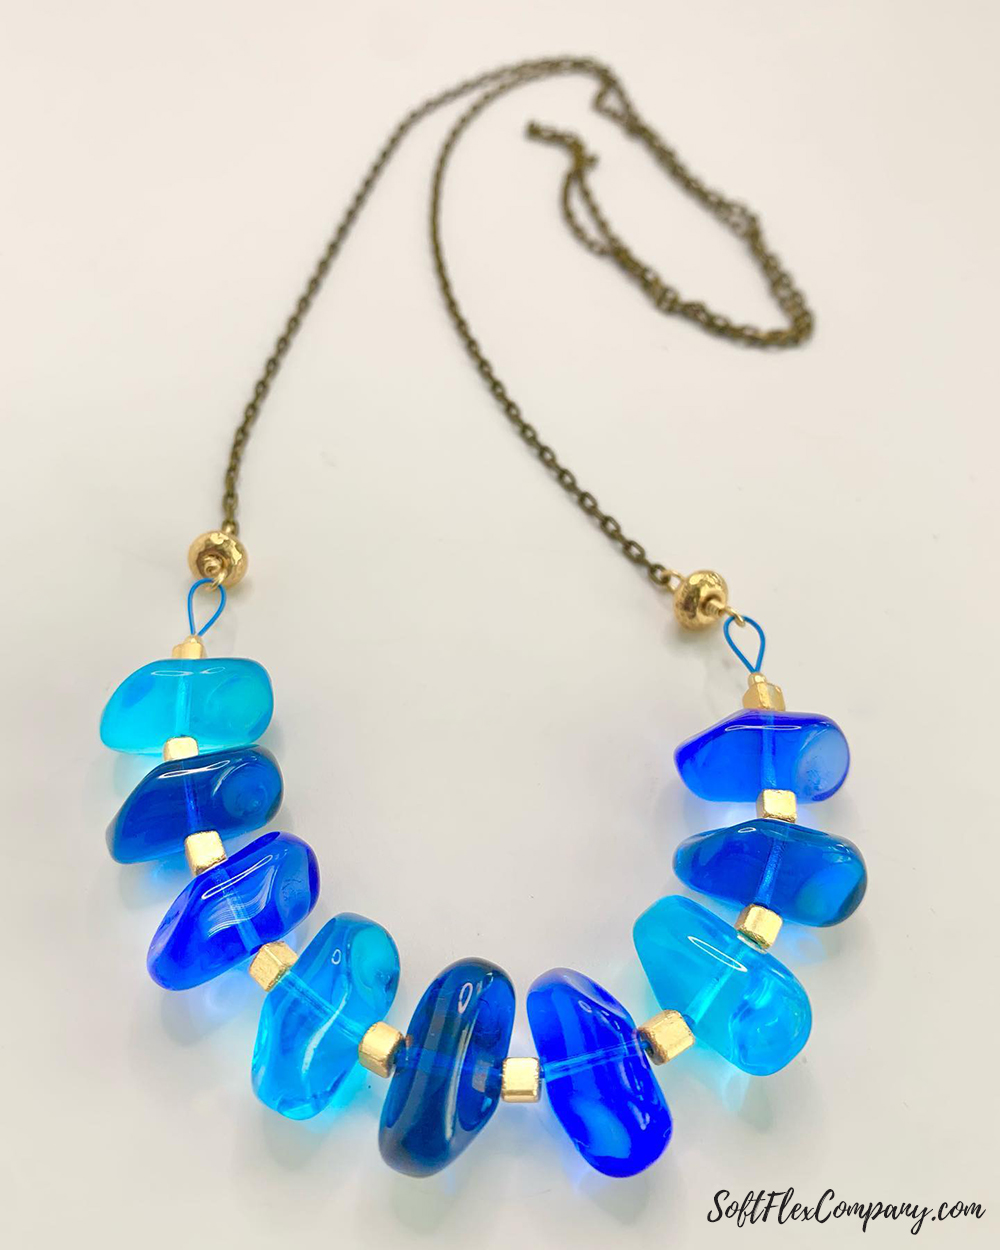 Soft Flex & Sam's Bead Shop Necklace by Sara Oehler